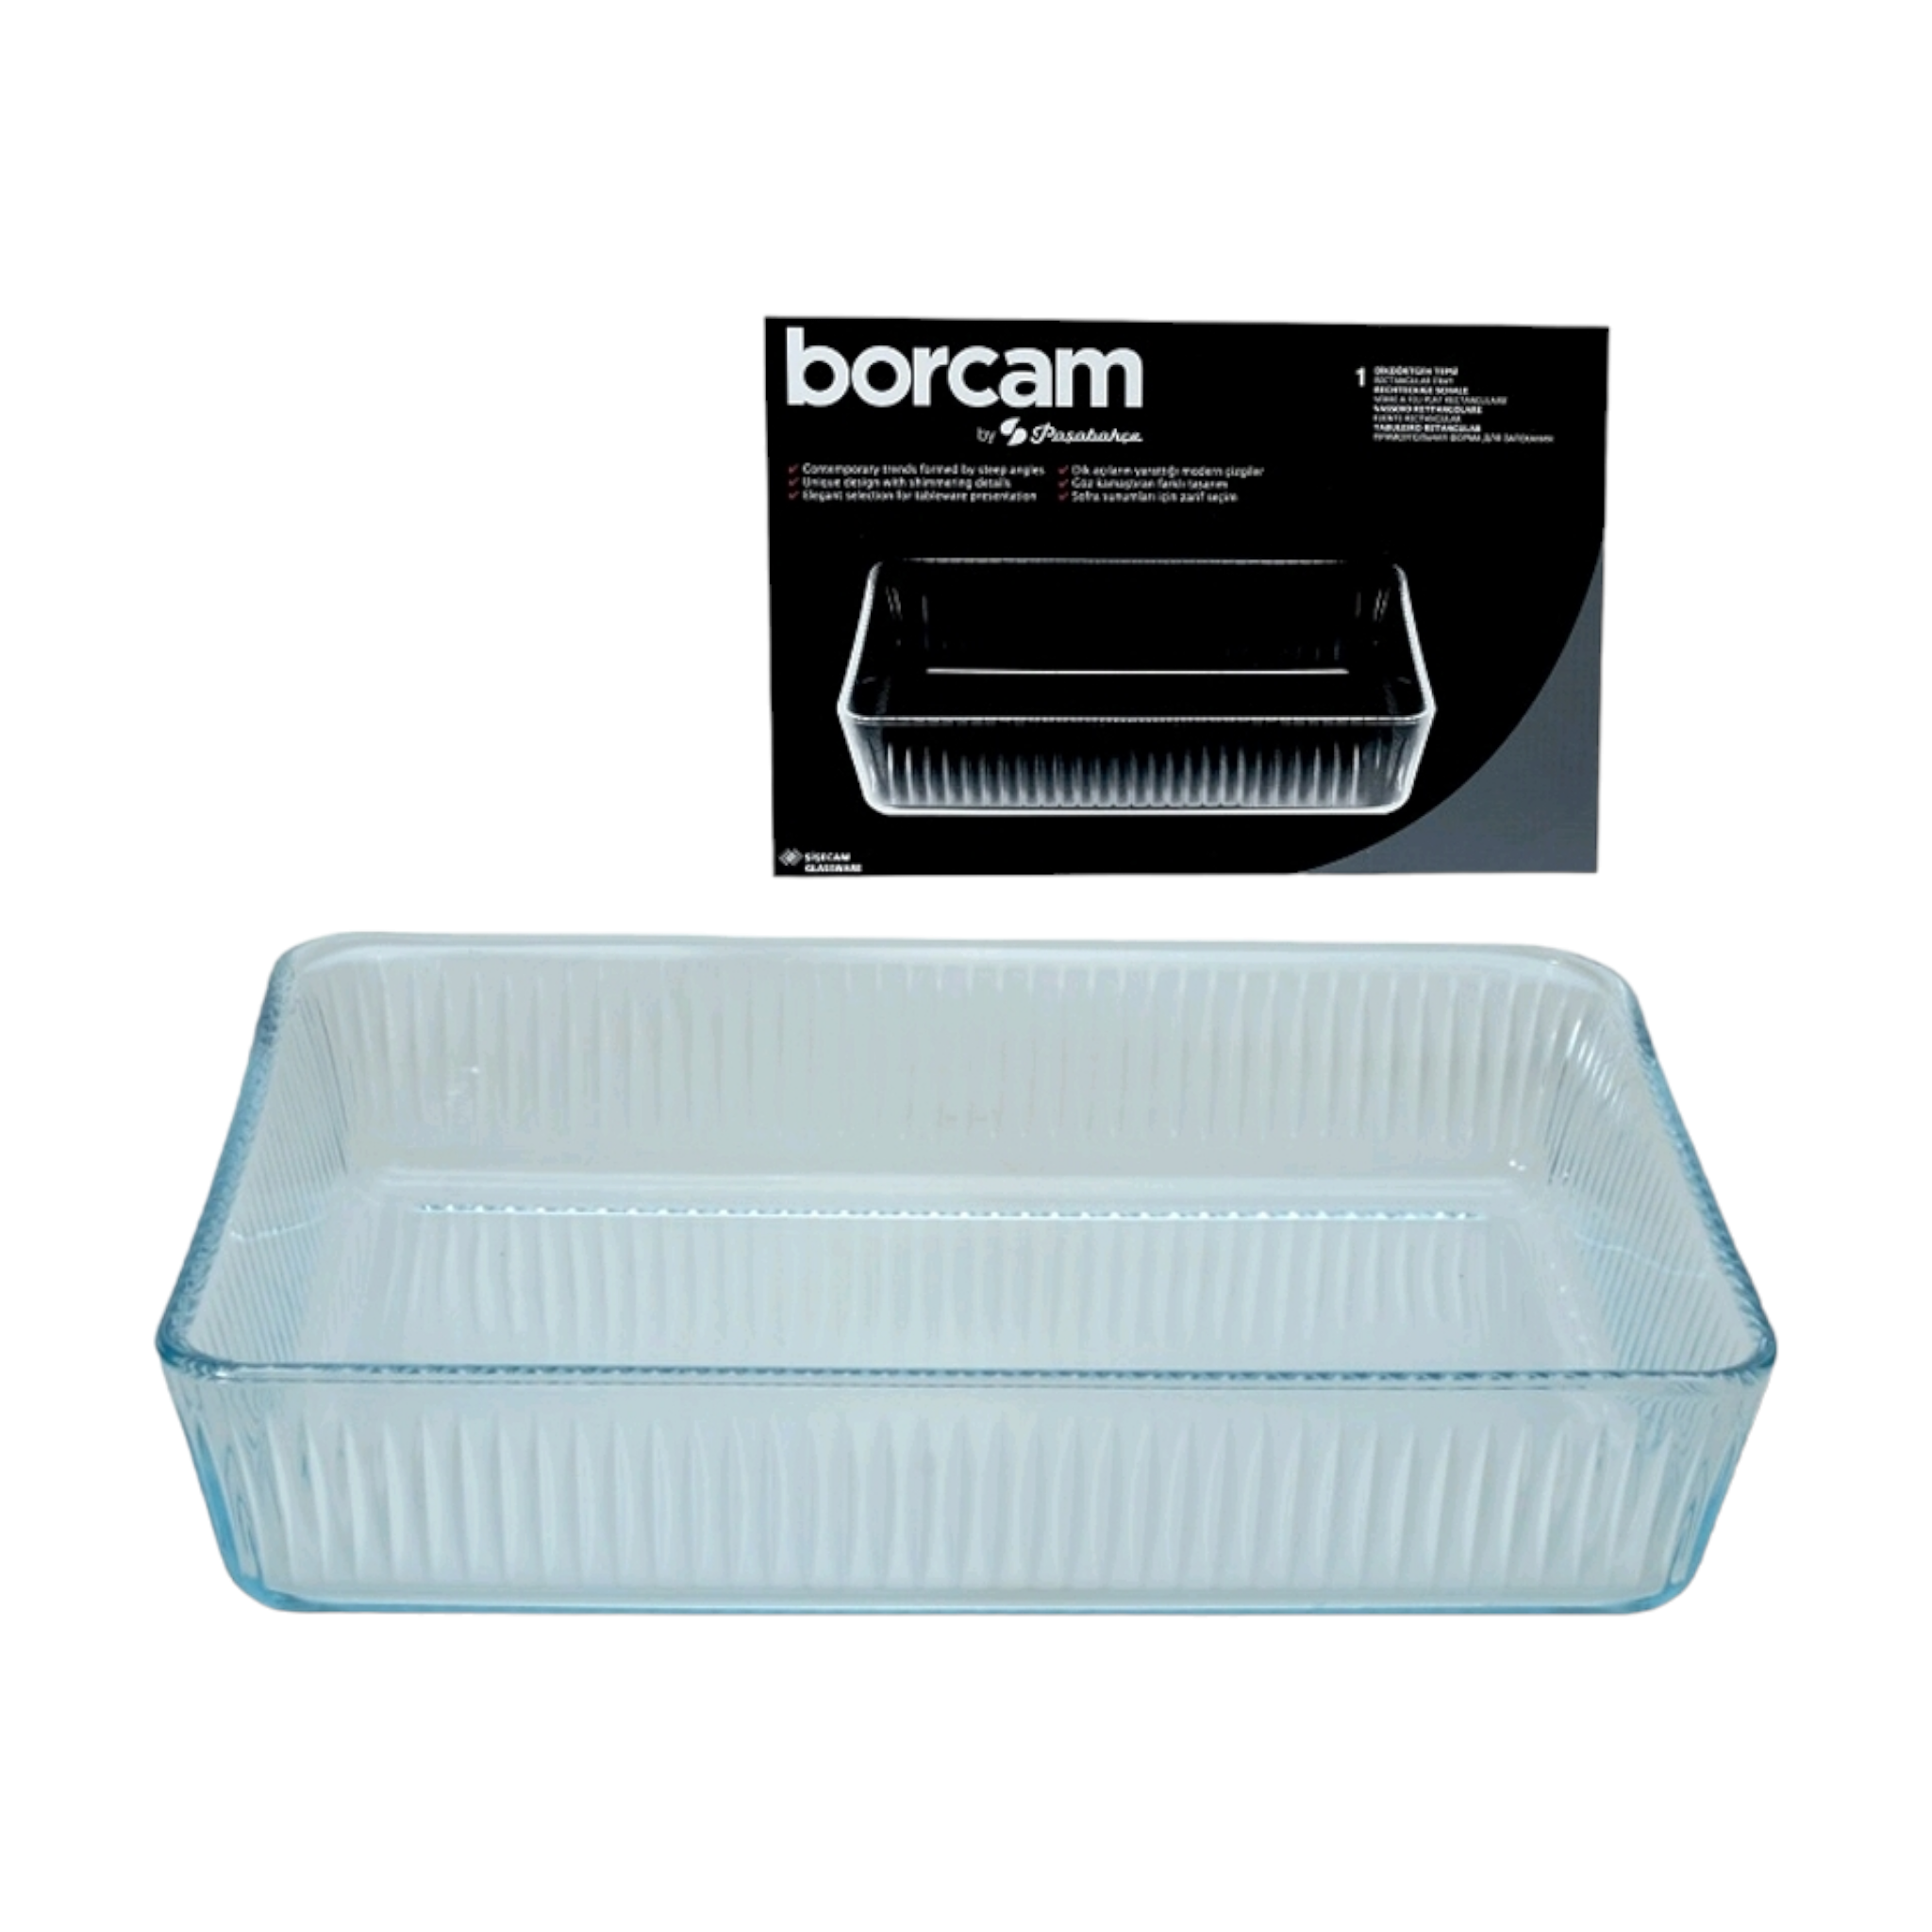 Borcam Glass Serving Dish Rectangular Tray 3L 24080